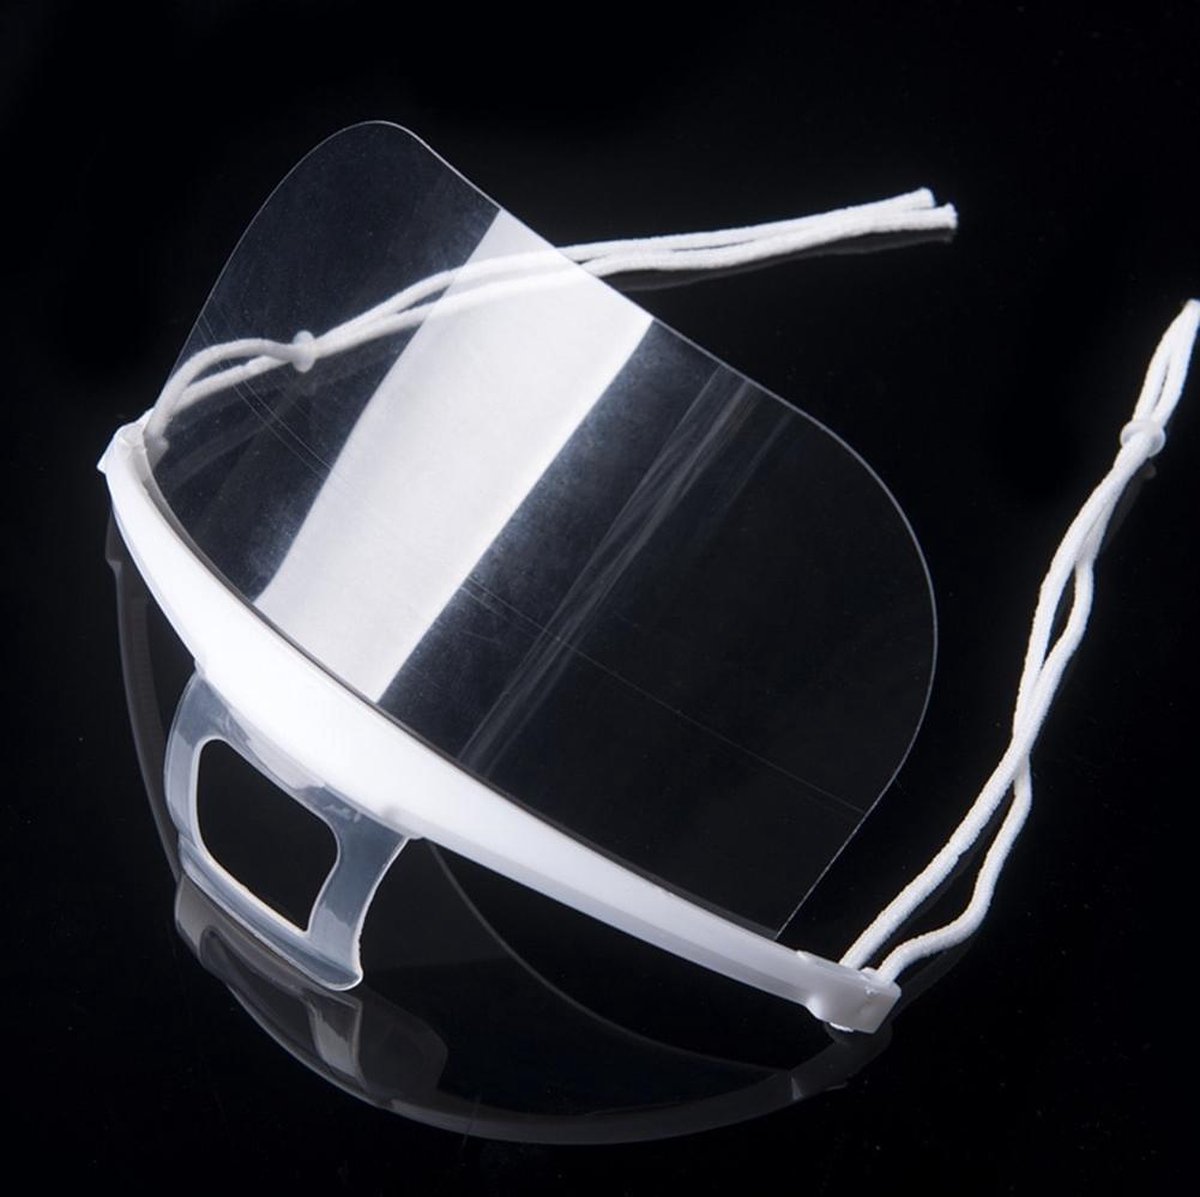 Transparant Mondkapje - Hygiënisch mondmasker - Gelaatmasker - Face shield - Herbruikbaar - plexiglas visier